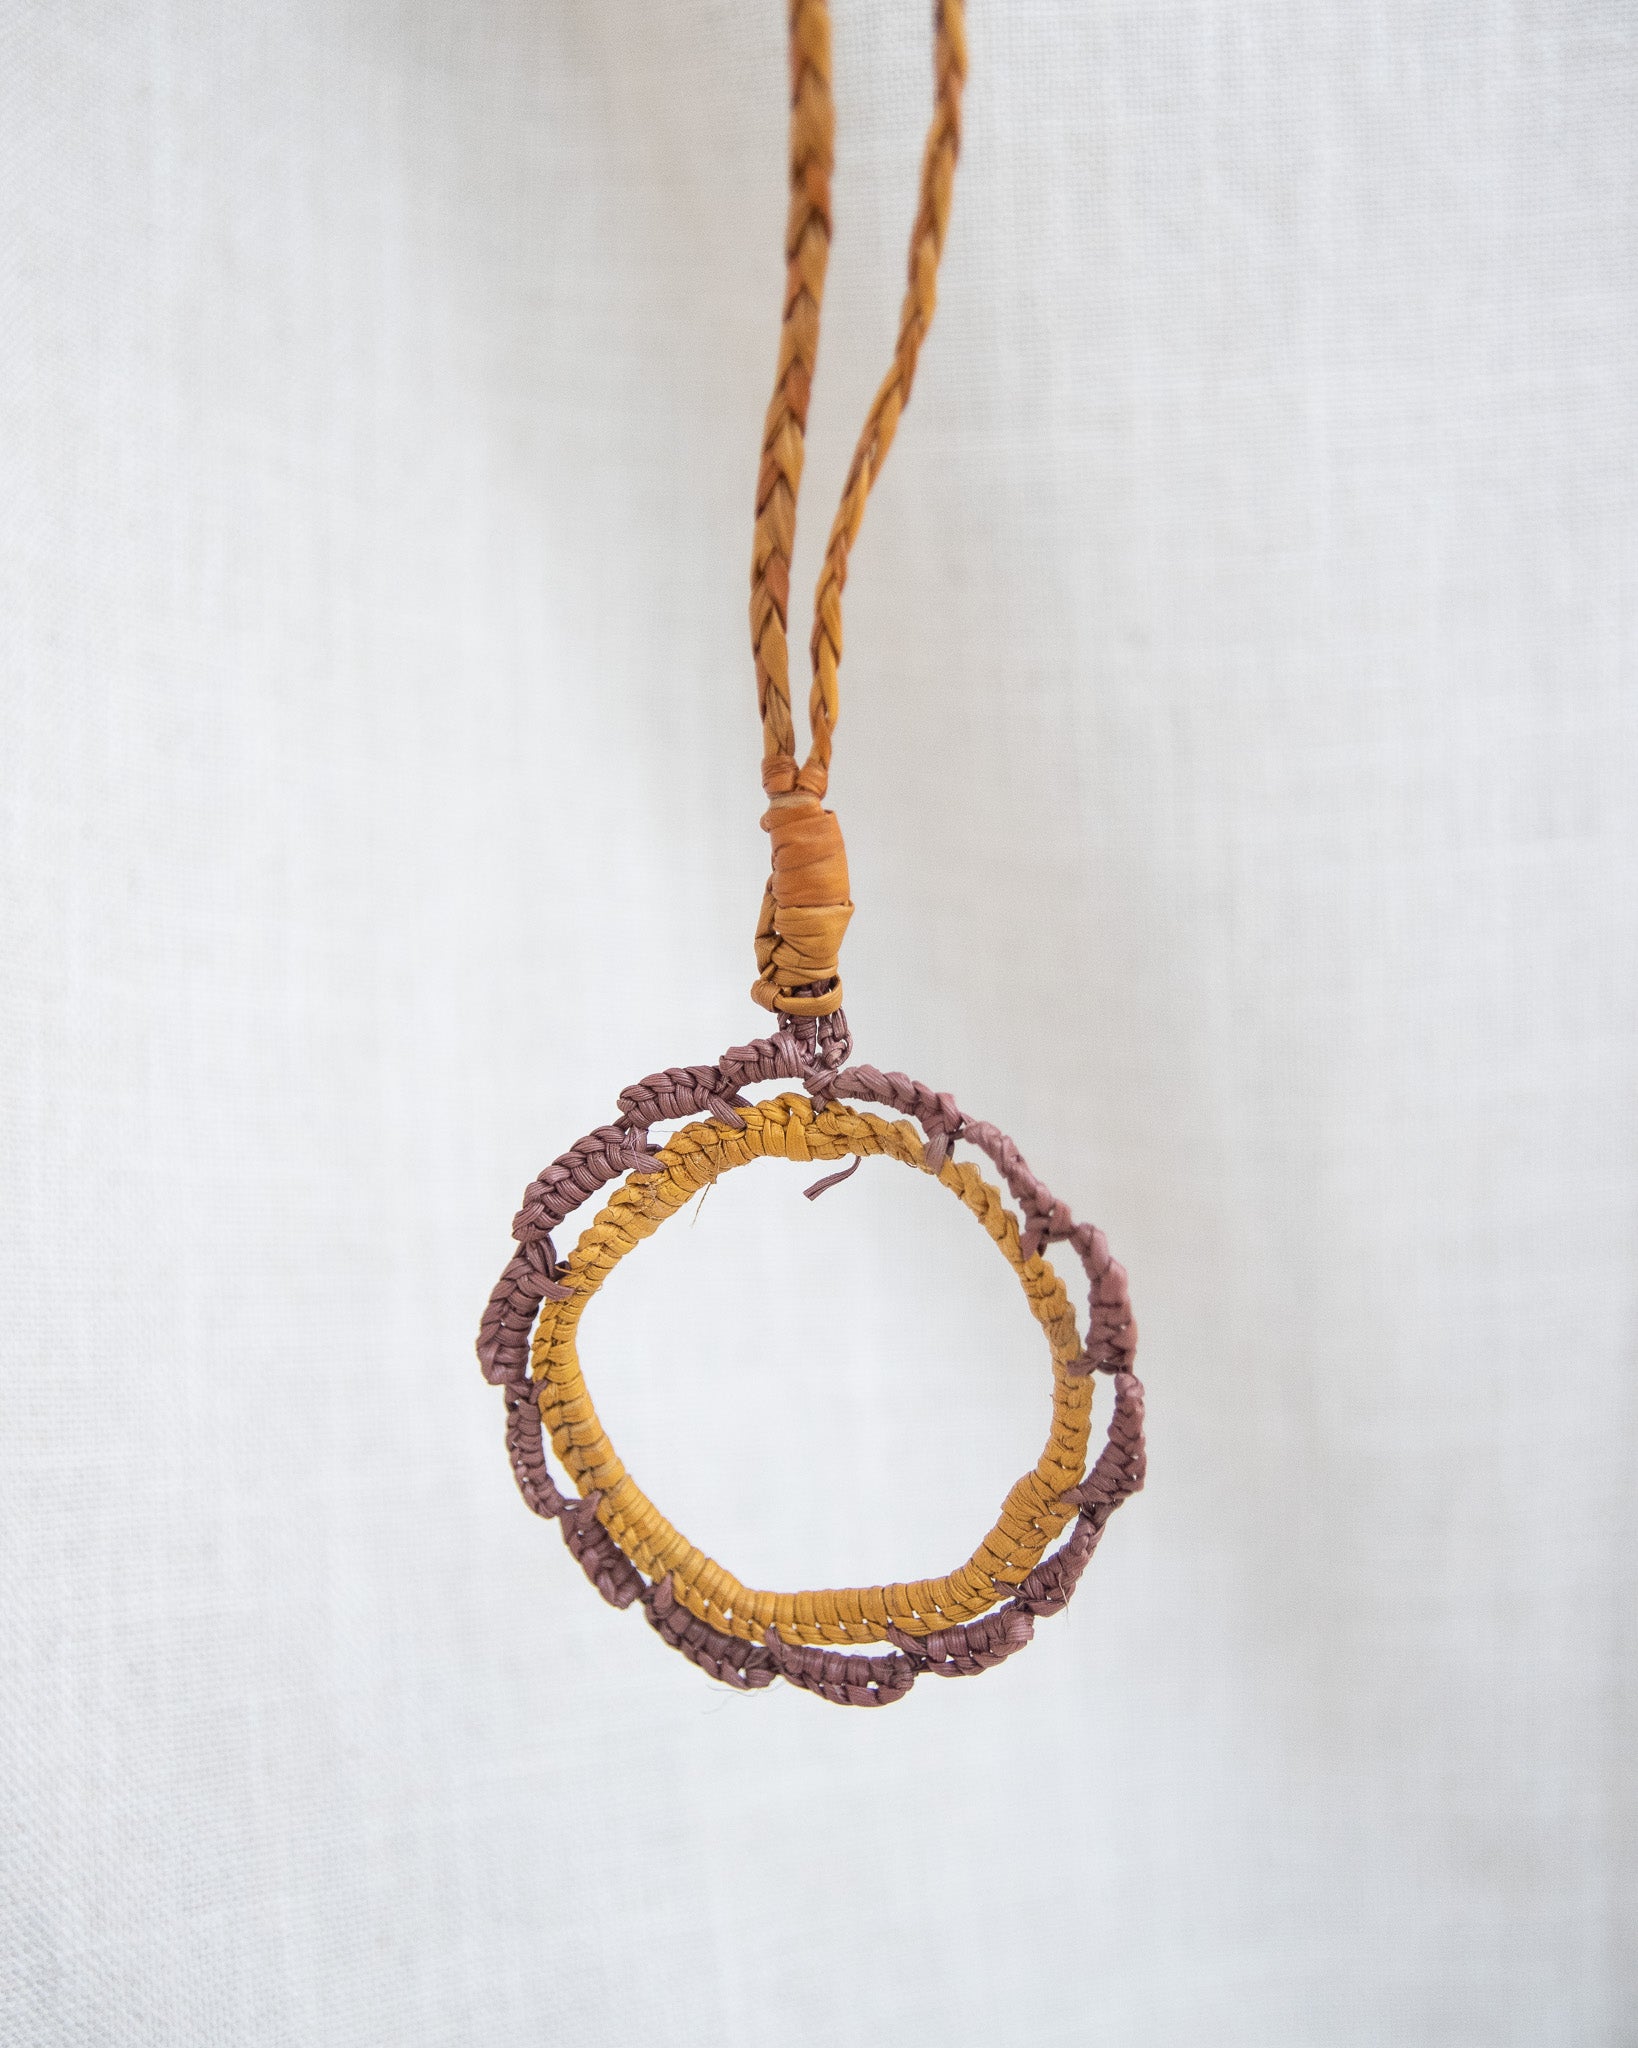 Aboriginal woven necklace